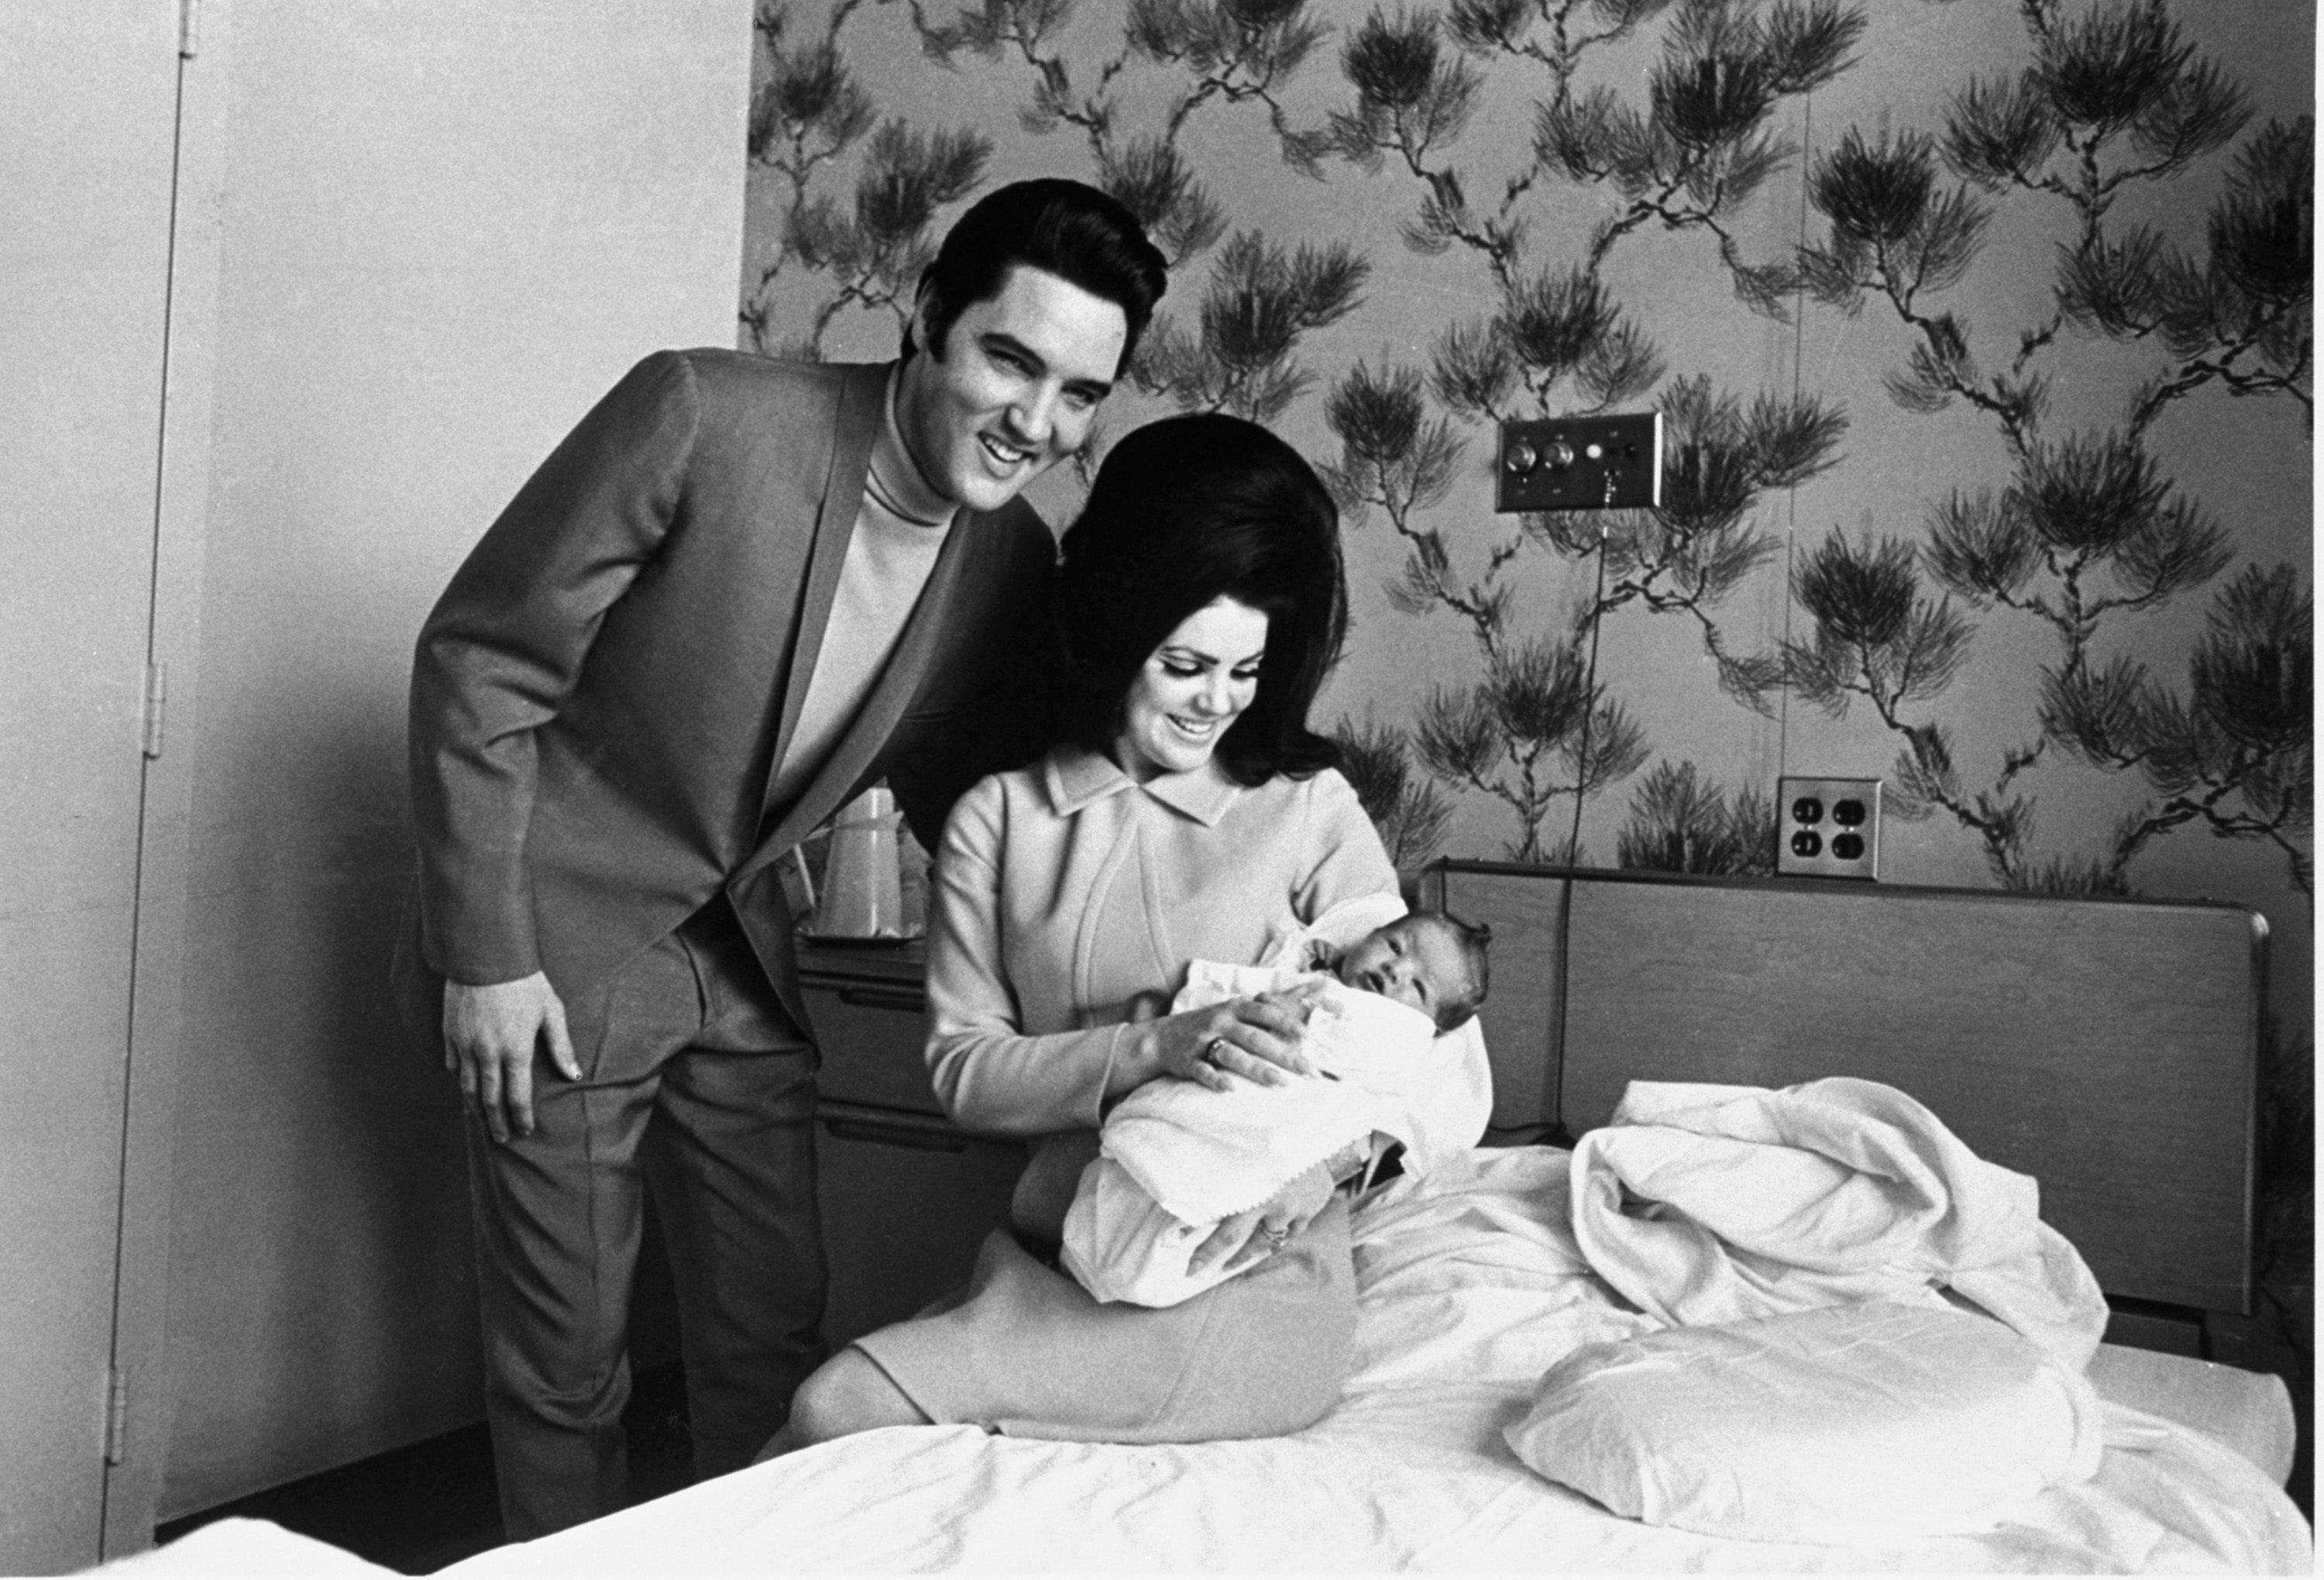 Newborn Lisa Marie Presley with parents Elvis and Priscilla